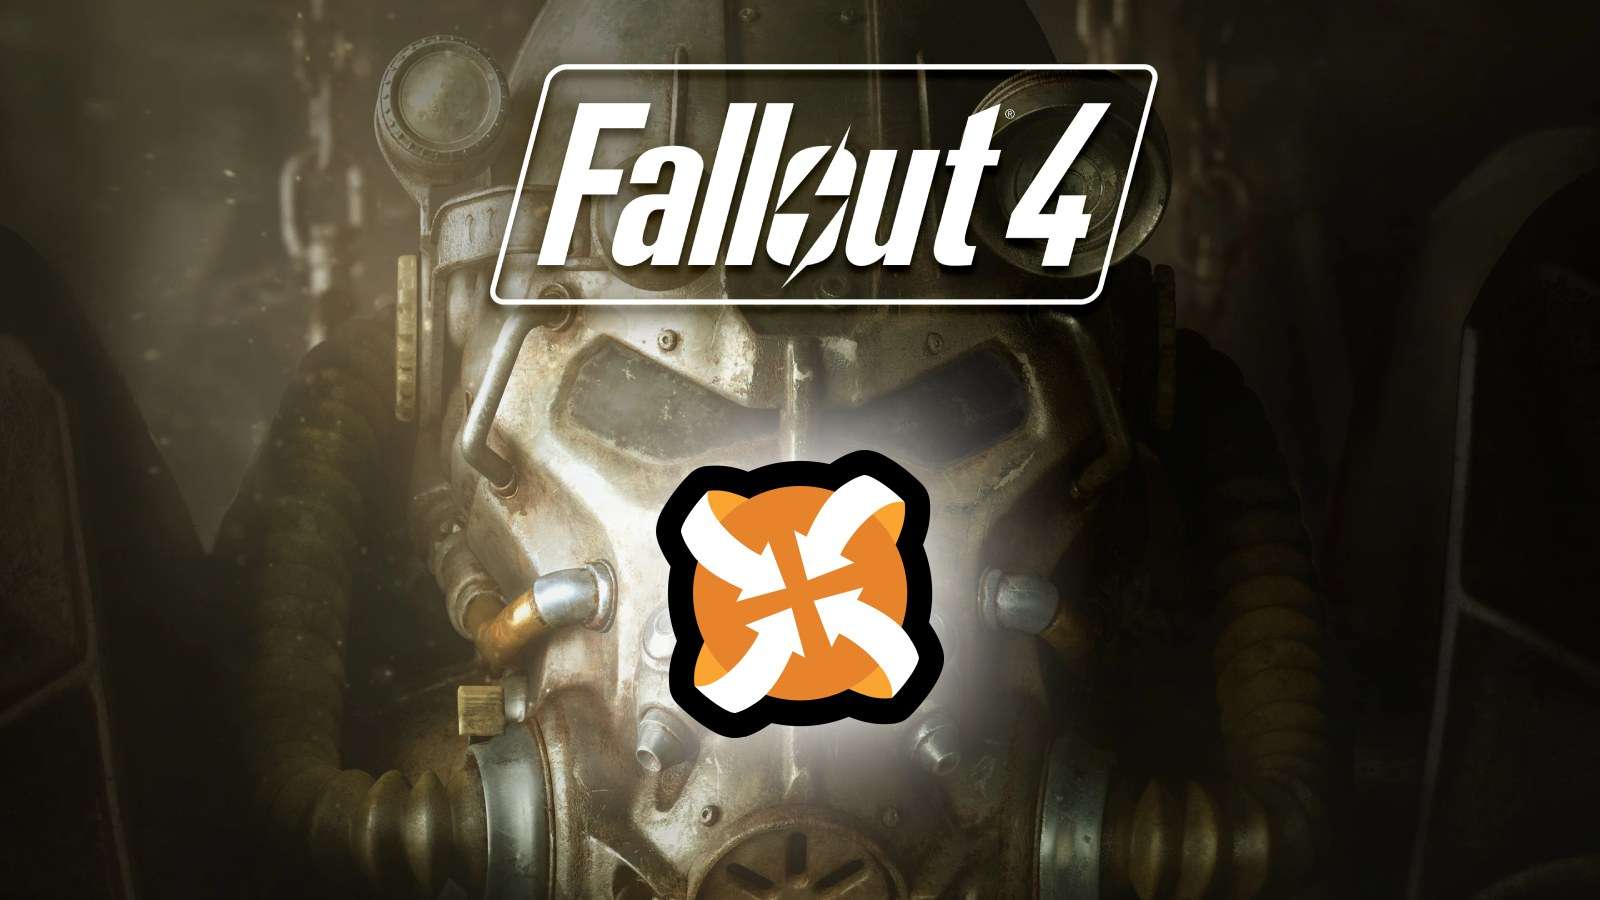 Fallout 4 key art with lexusmods logo on top